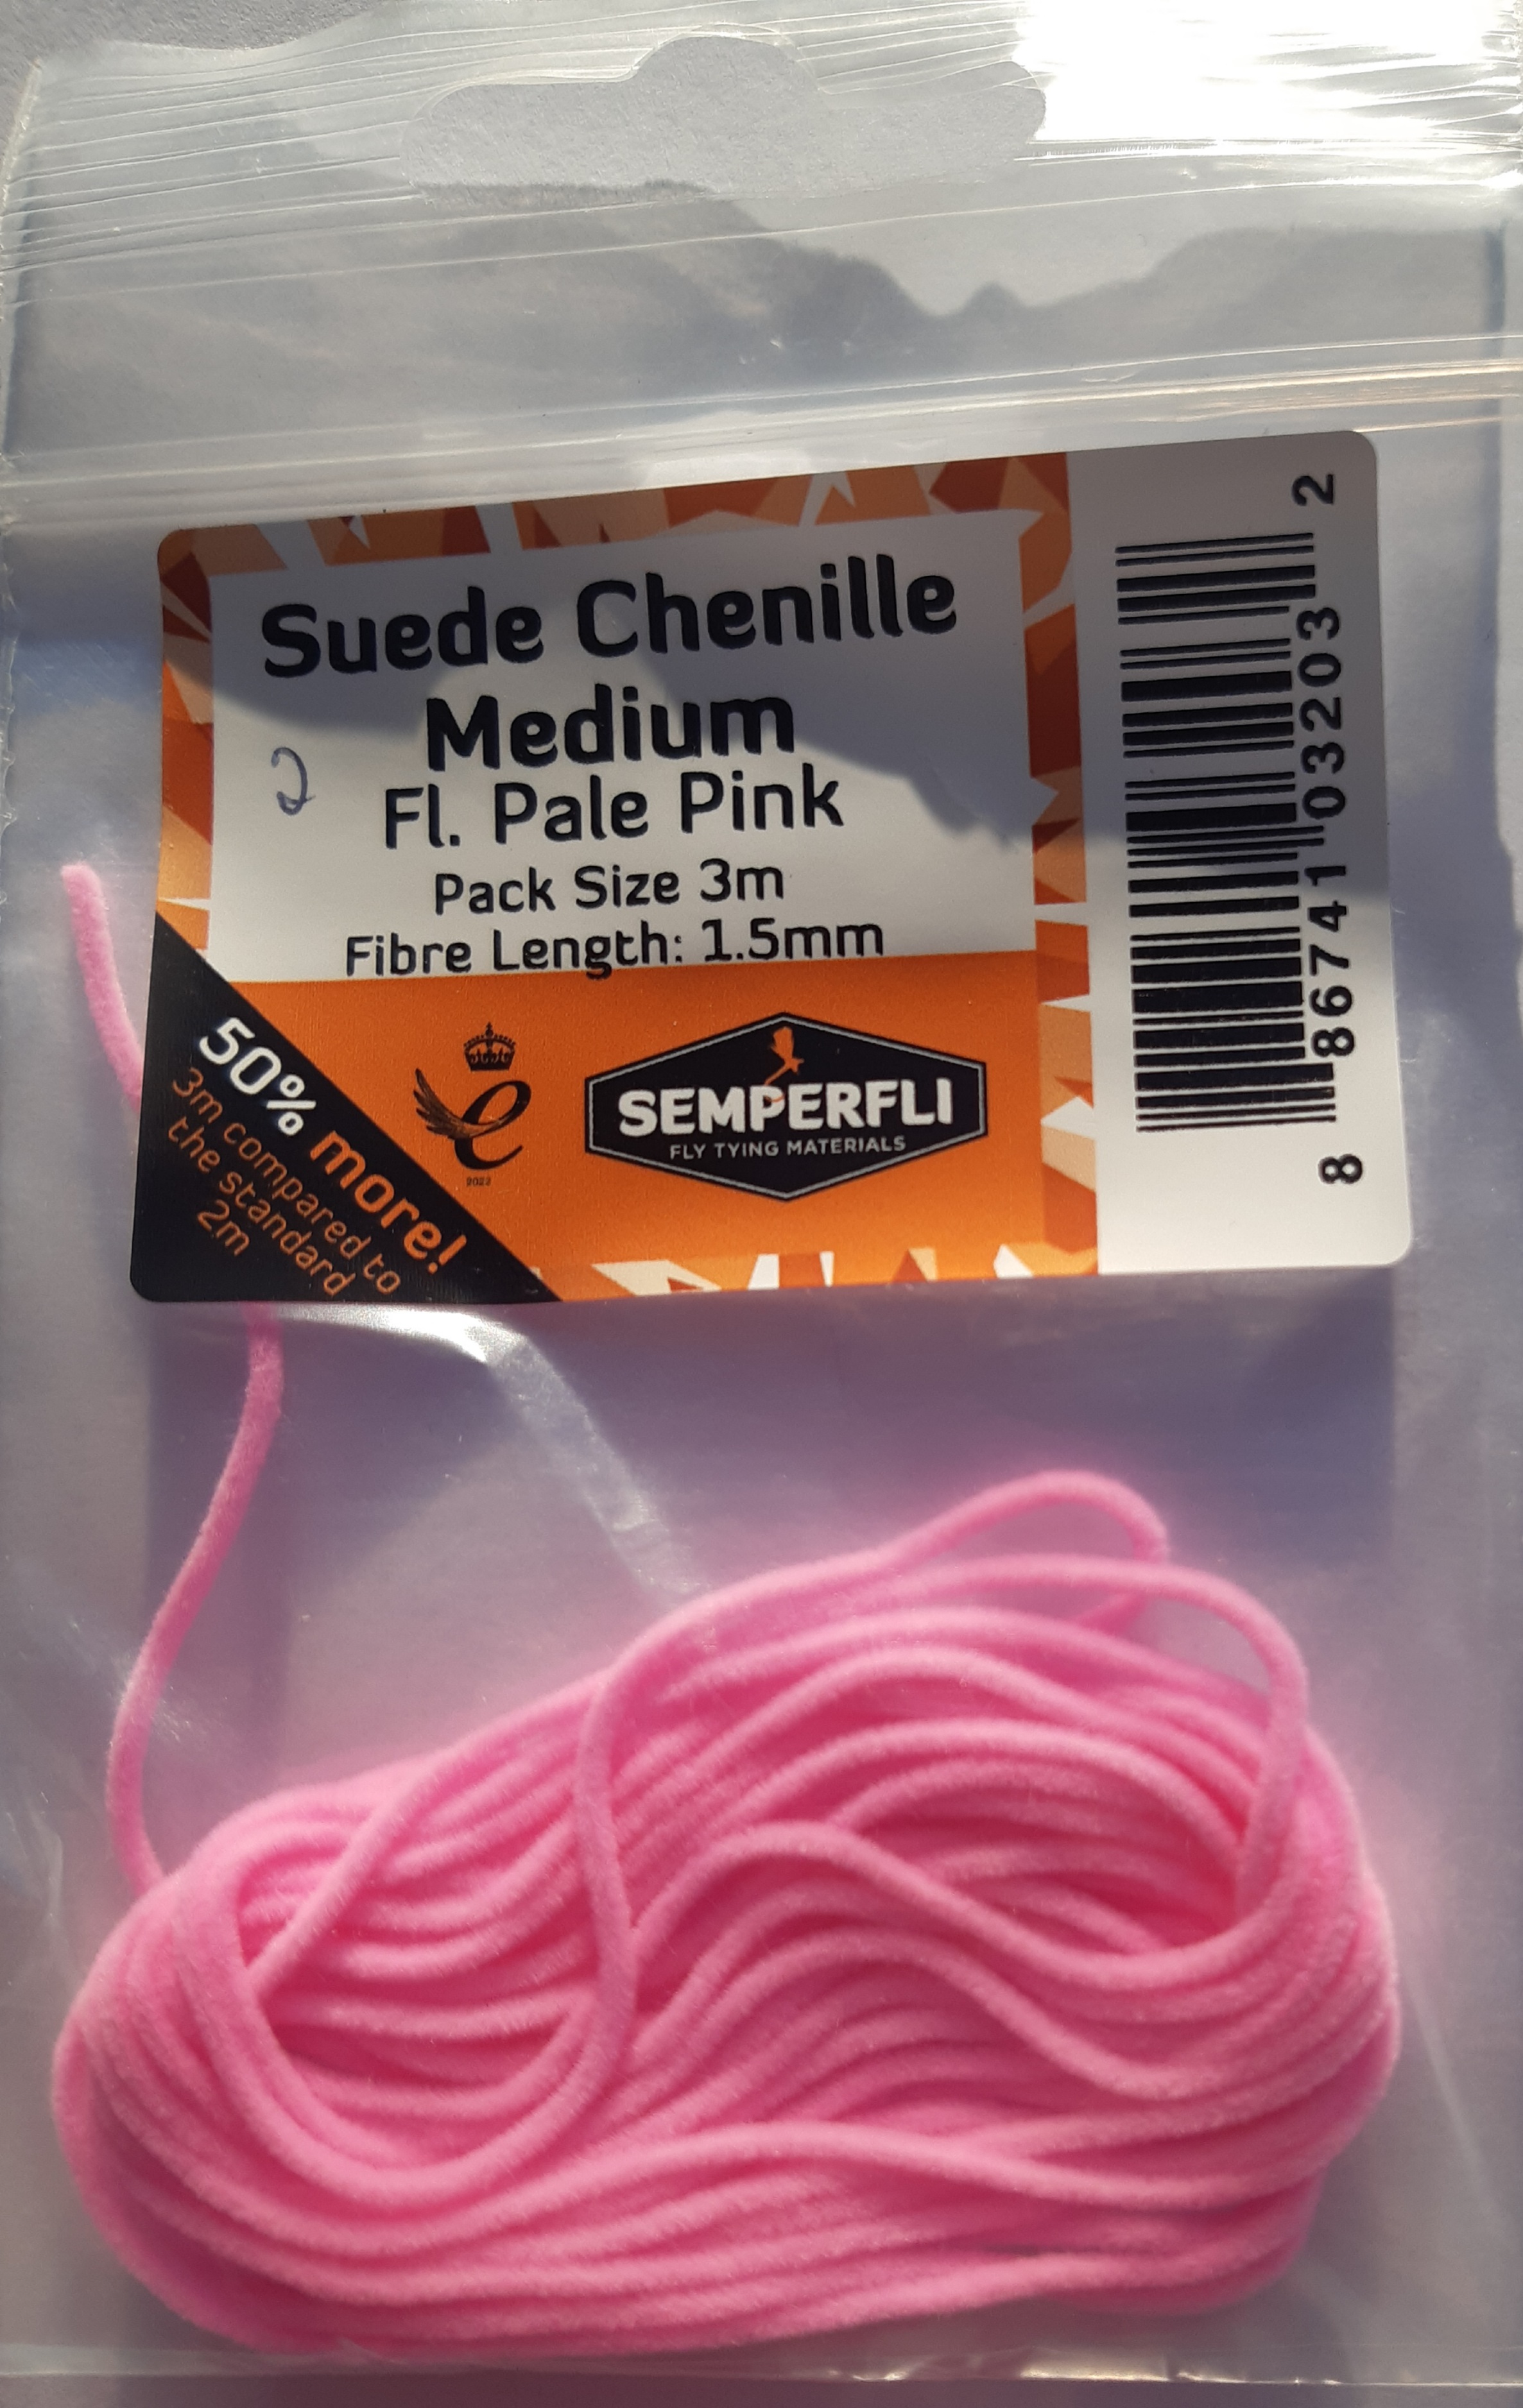 Medium fl pale pink 1.5mm